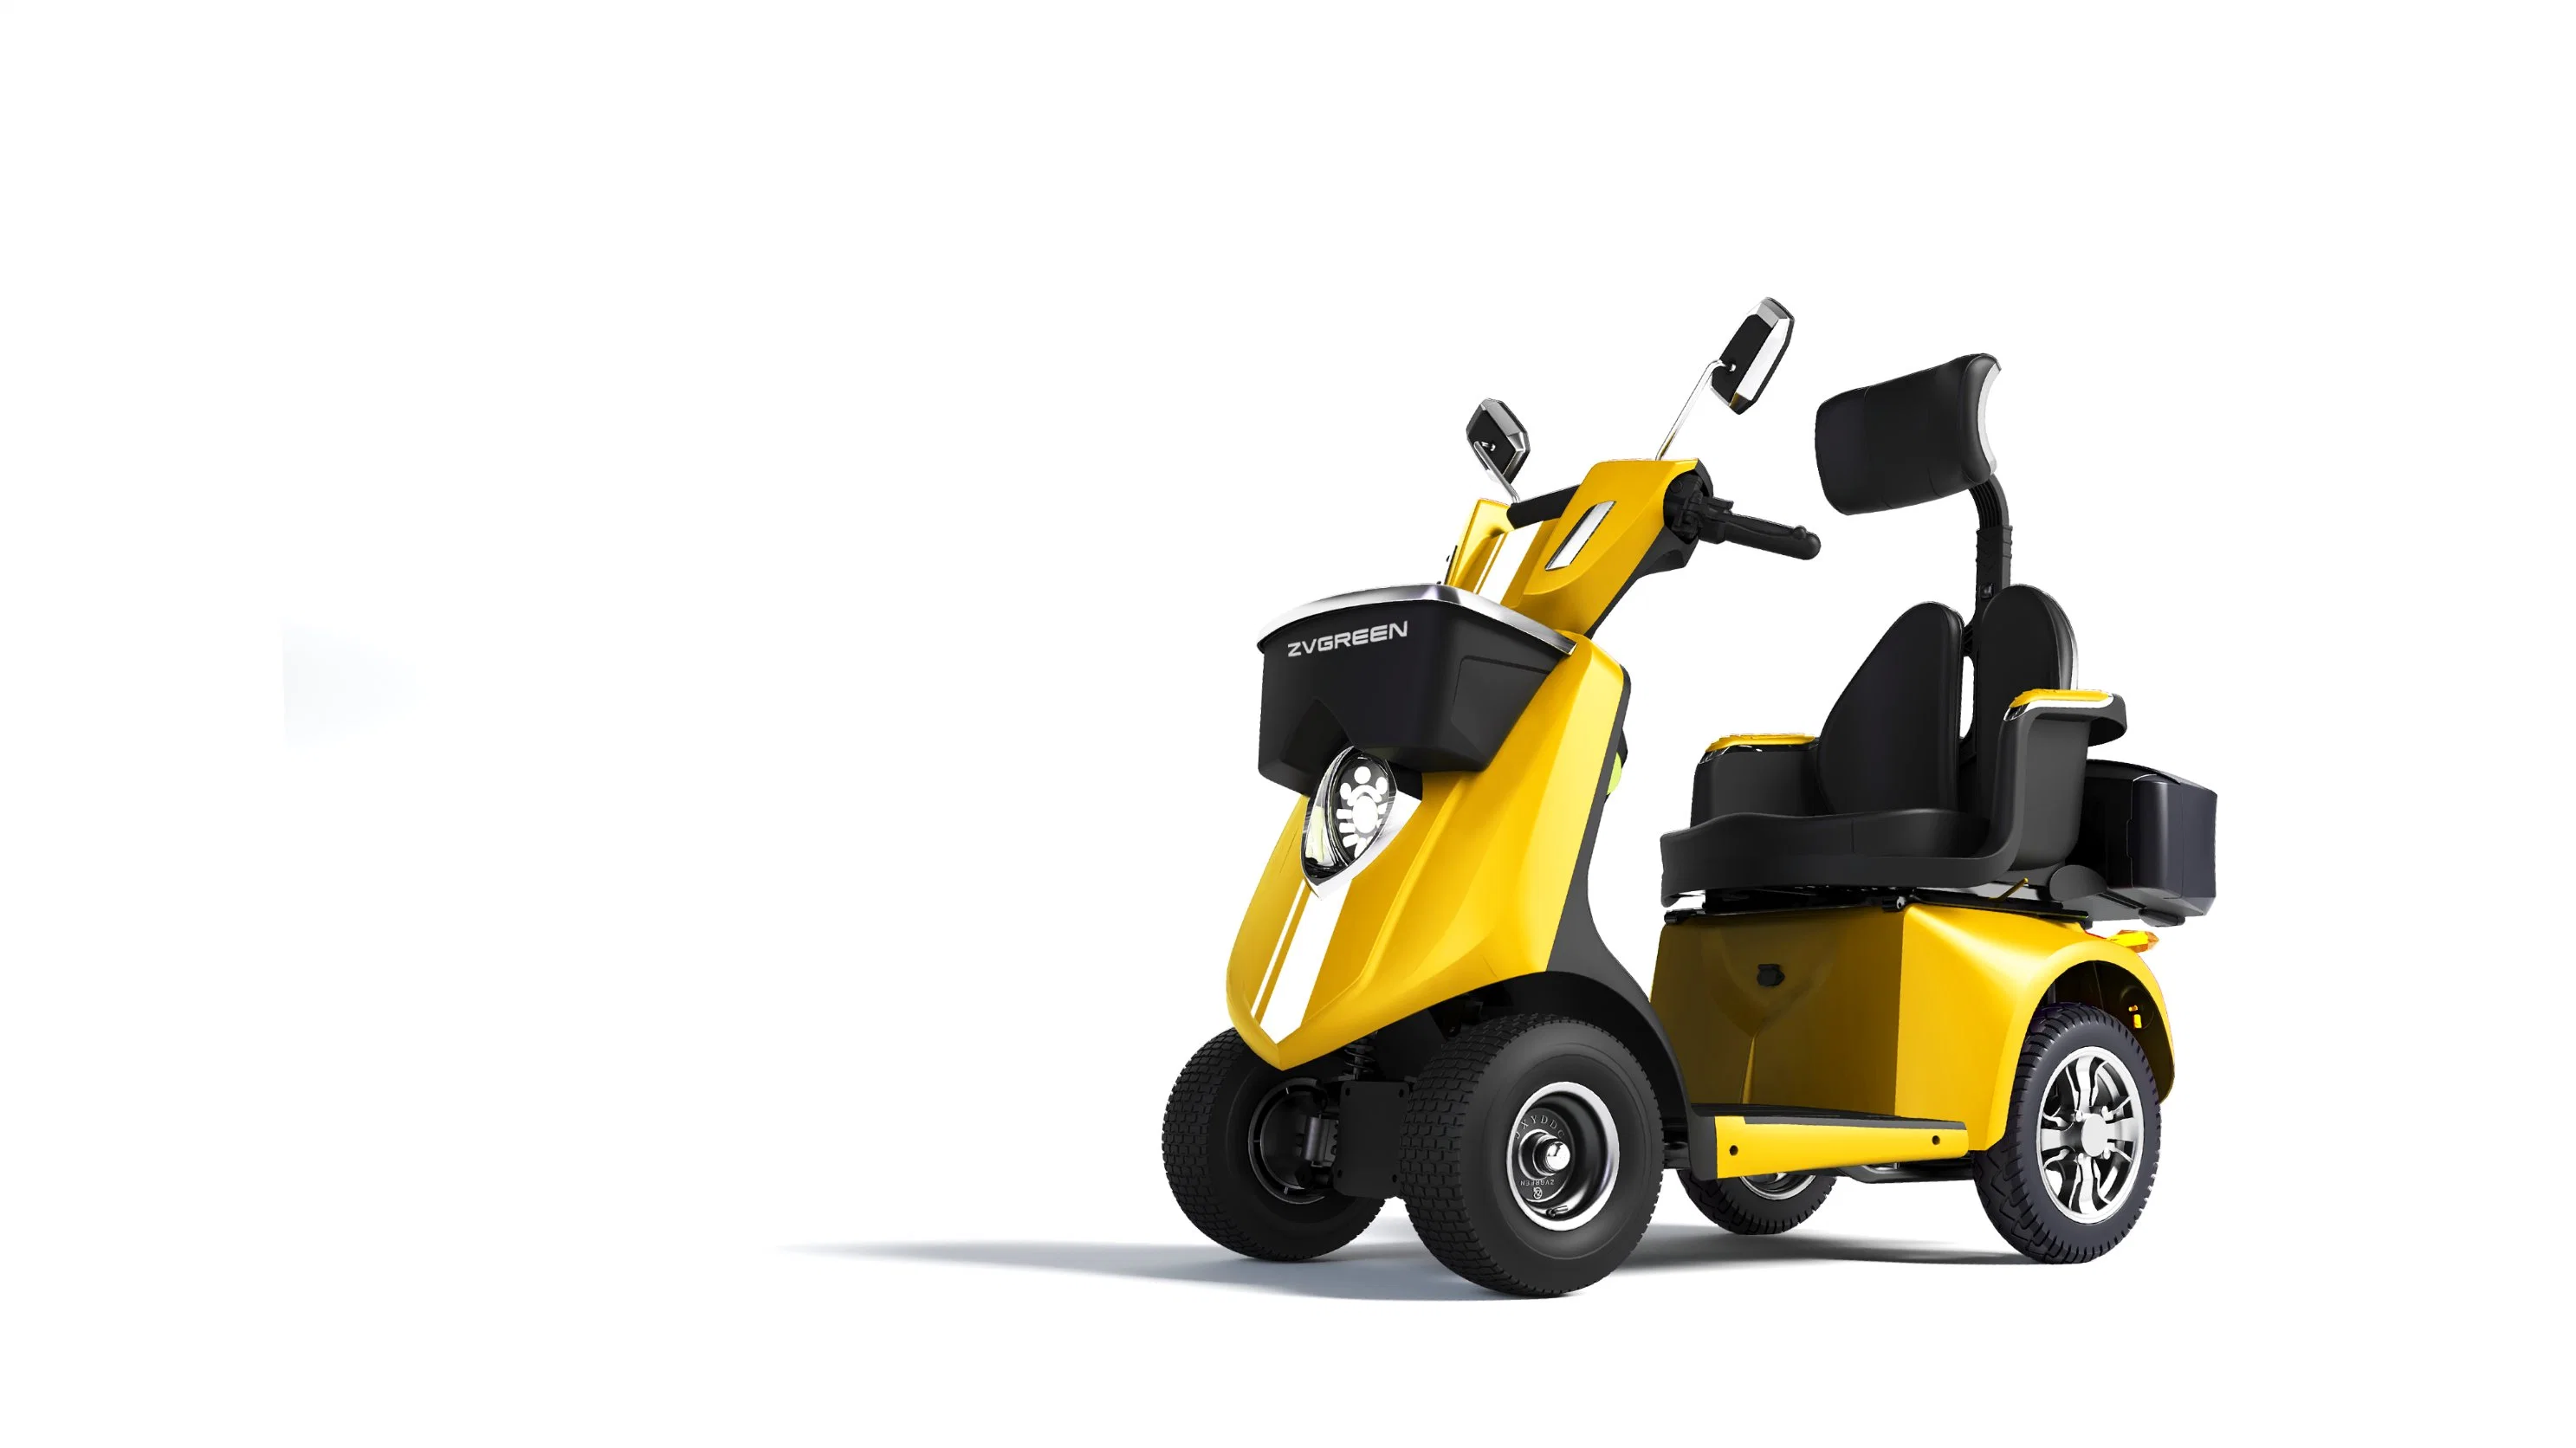 Jxy4 4 Wheel Electric Mobility Scooter для инвалидов Скутер